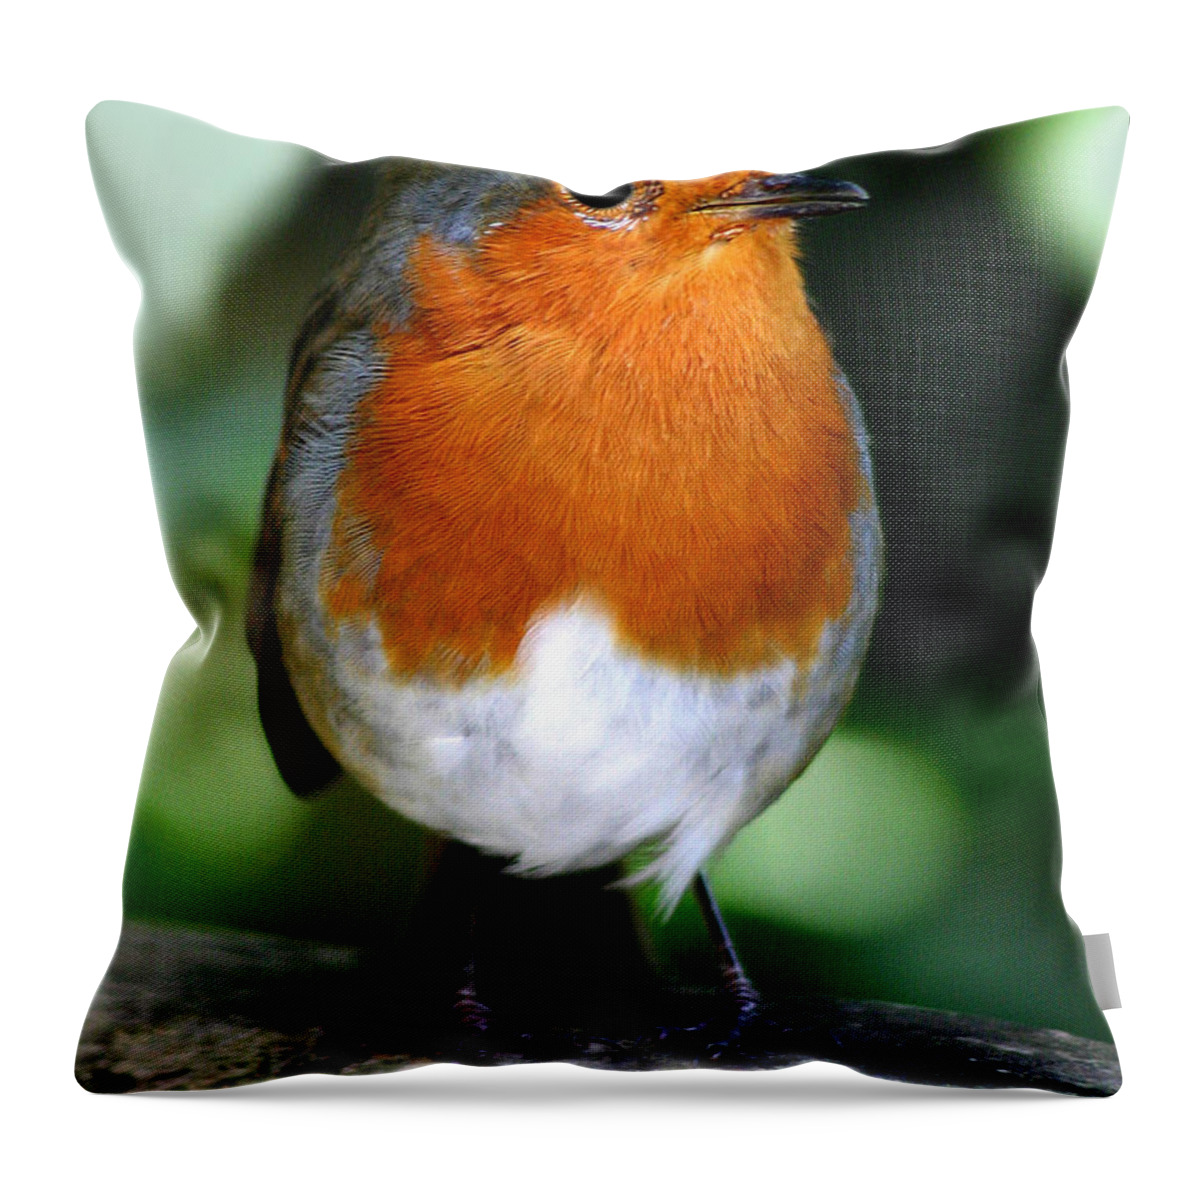  Robin Throw Pillow featuring the photograph Robin by John Topman